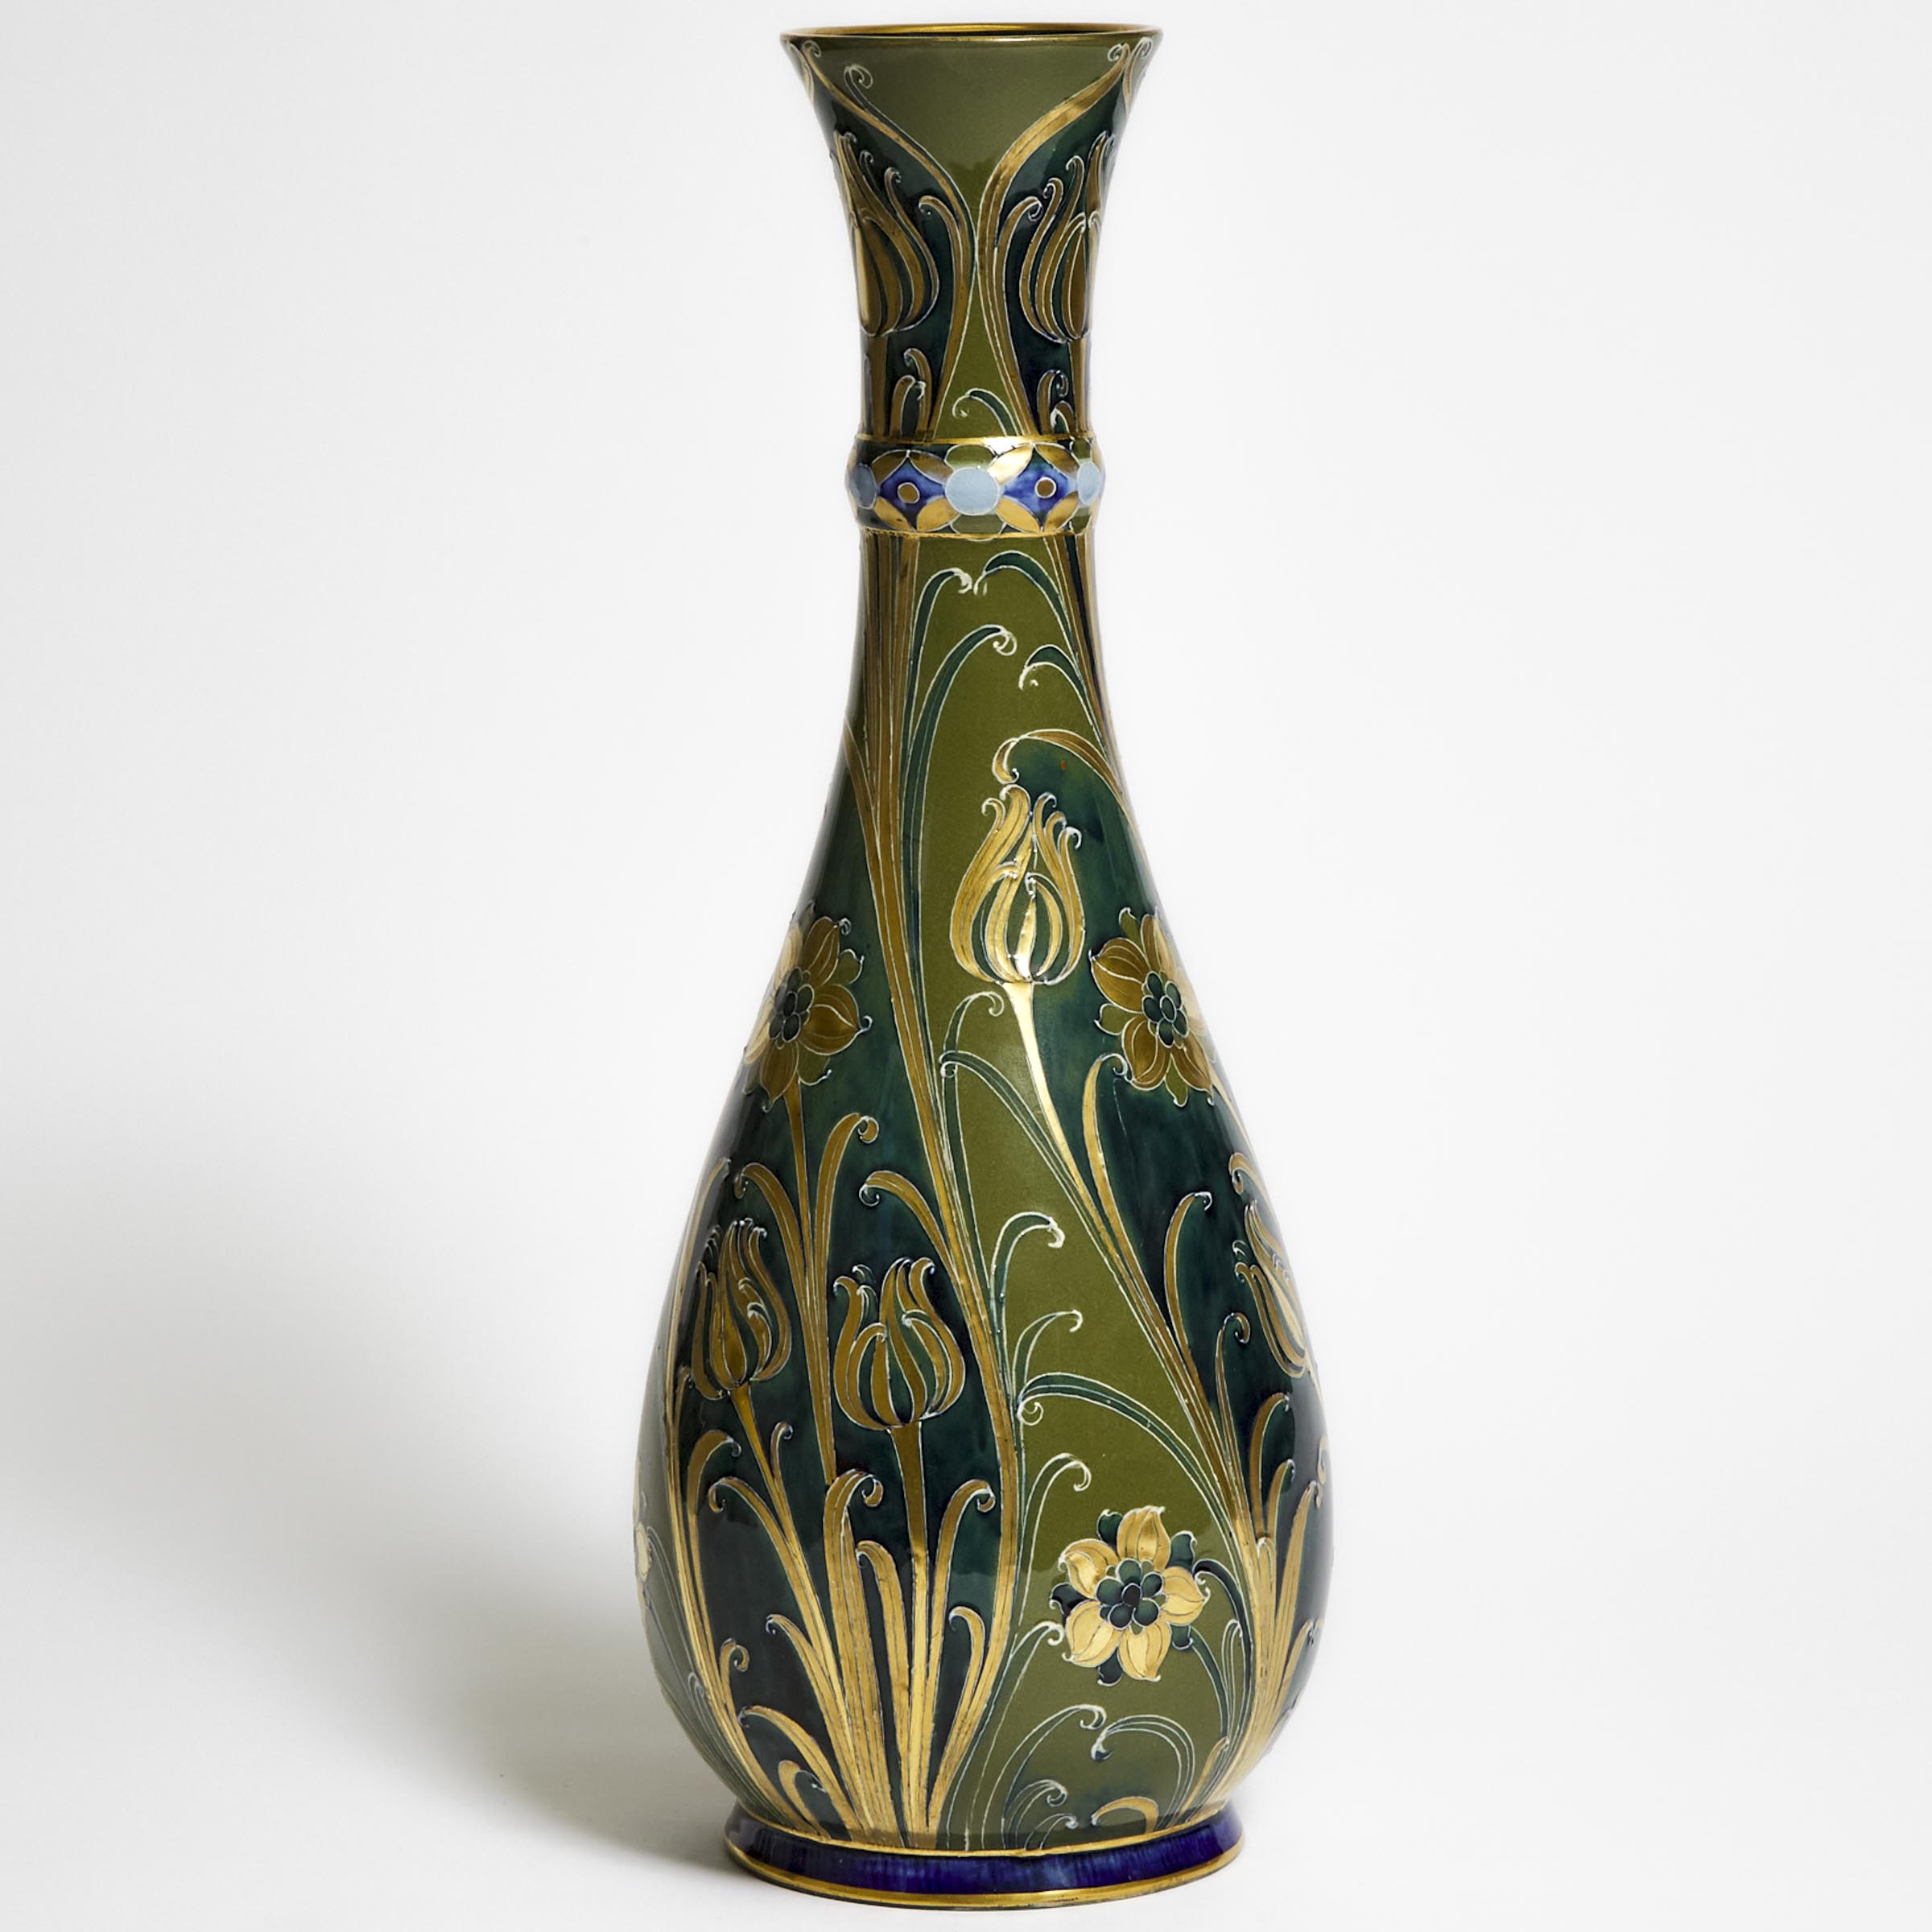 Macintyre Moorcroft Green and Gold Florian Large Vase, c.1903